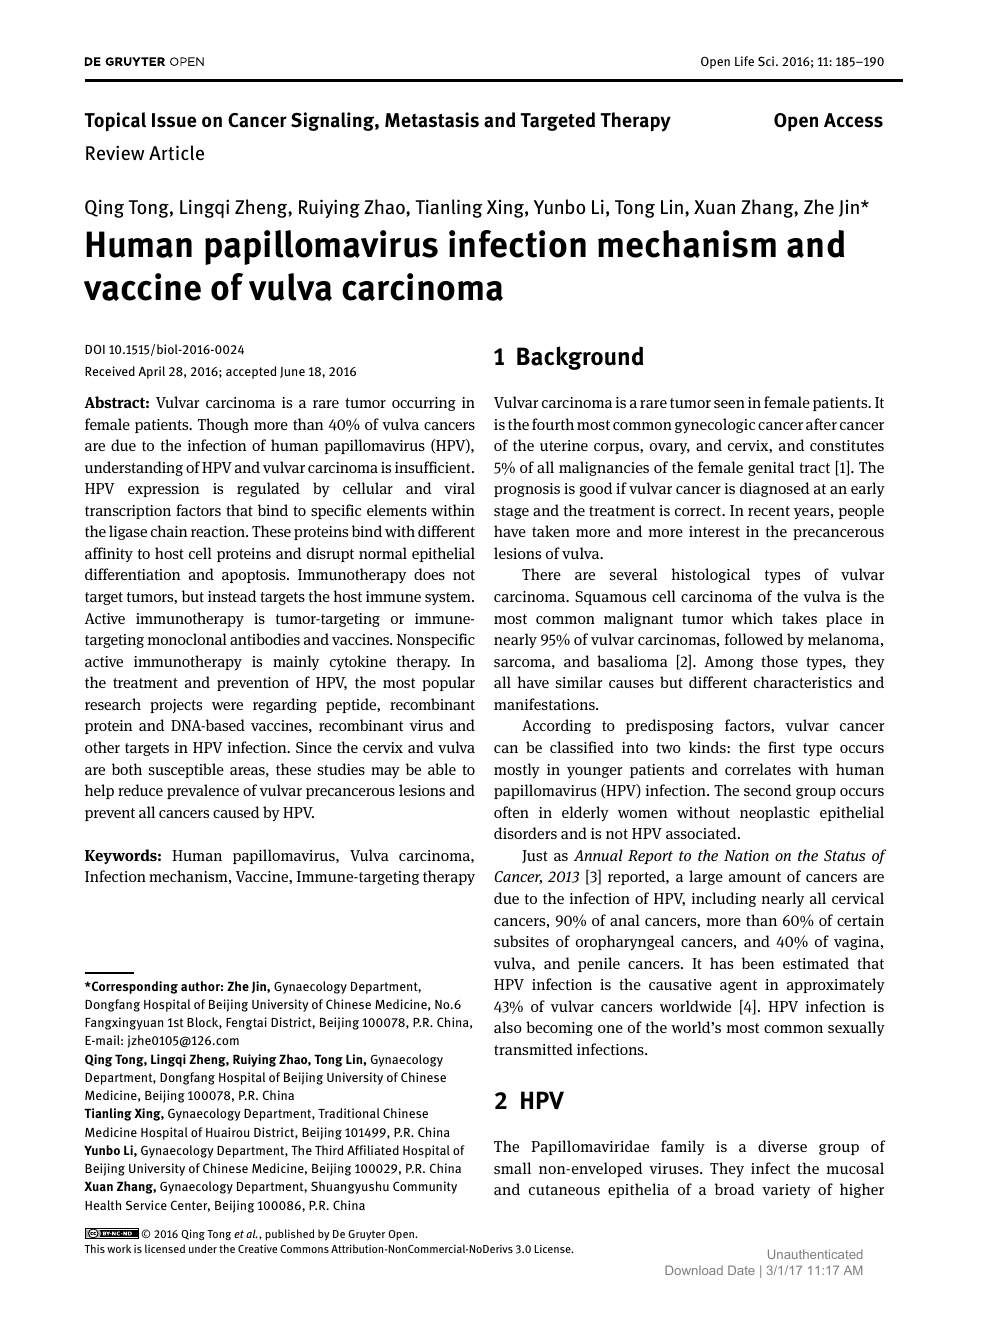 human papillomavirus review article